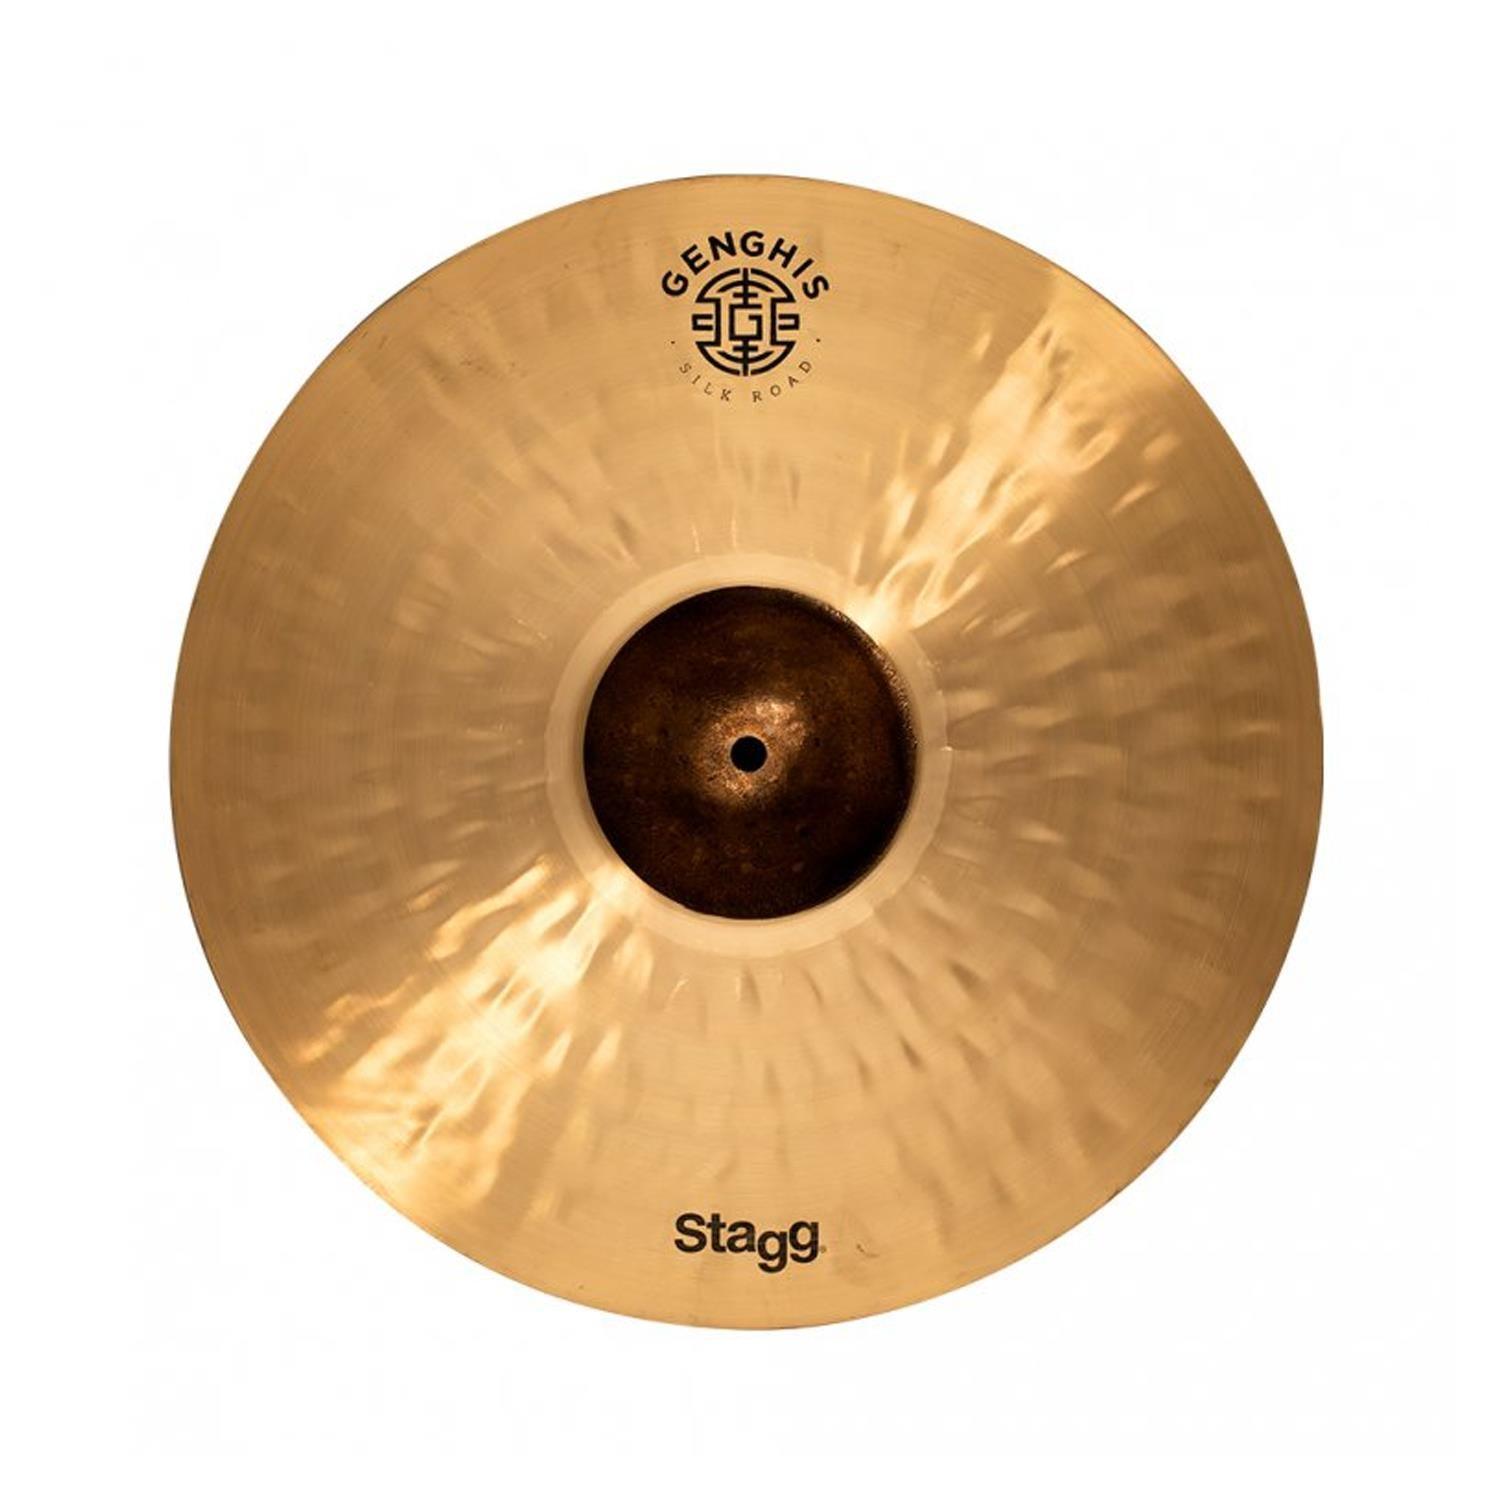 Stagg GENG-CM17E 17" Genghis Exo Medium Crash Cymbal - DY Pro Audio